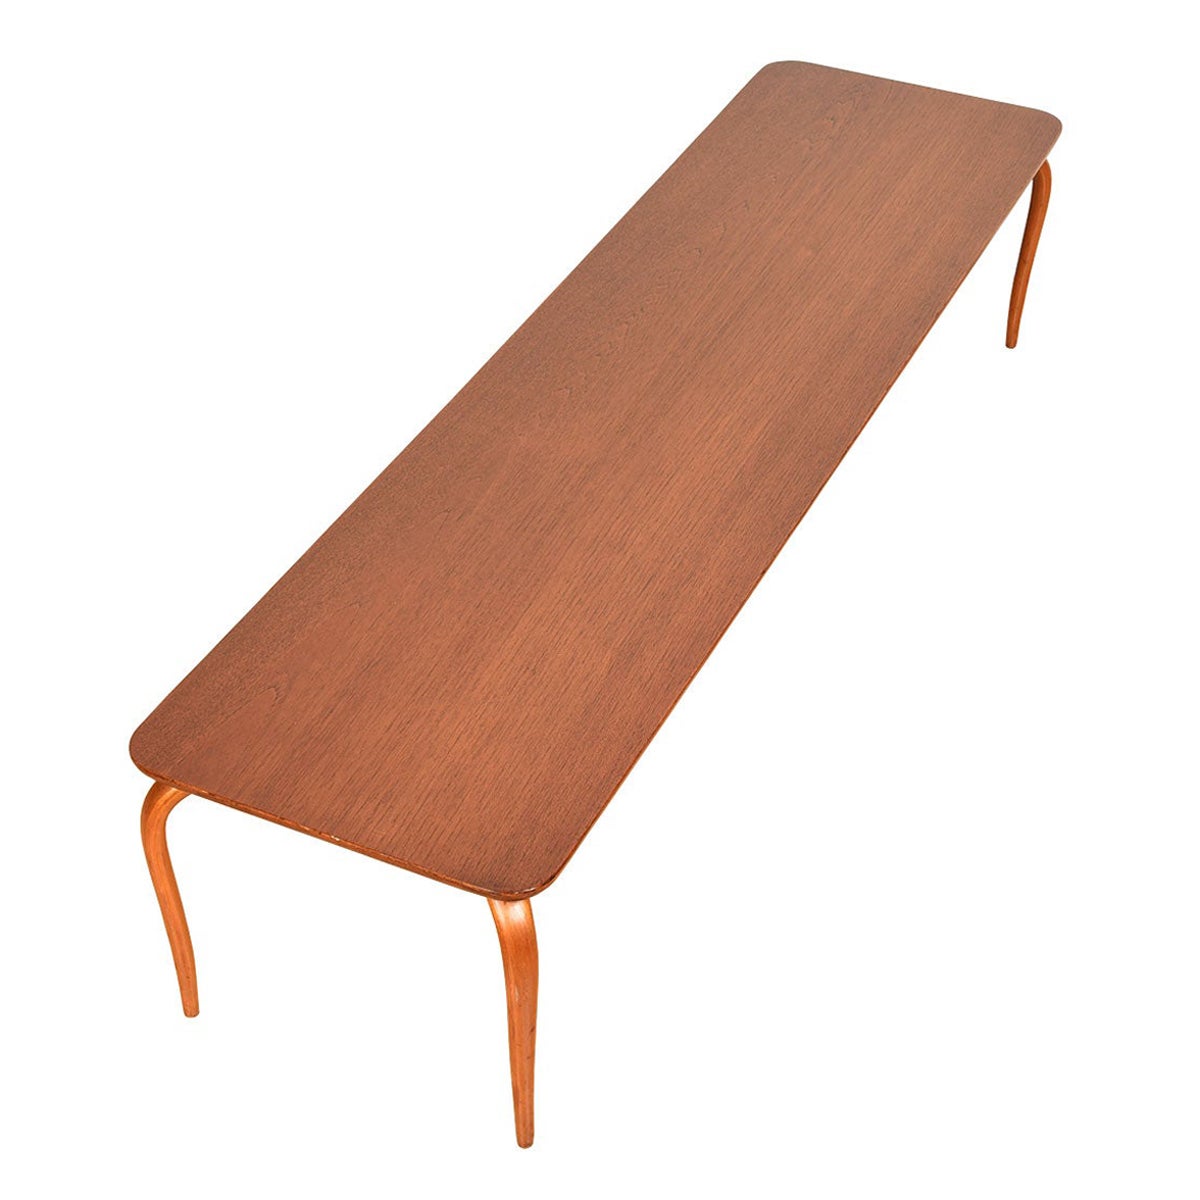 ‘Long Table’ Swedish Modern Organic-Leg Coffee Table by Bruno Mathsson, 1950s